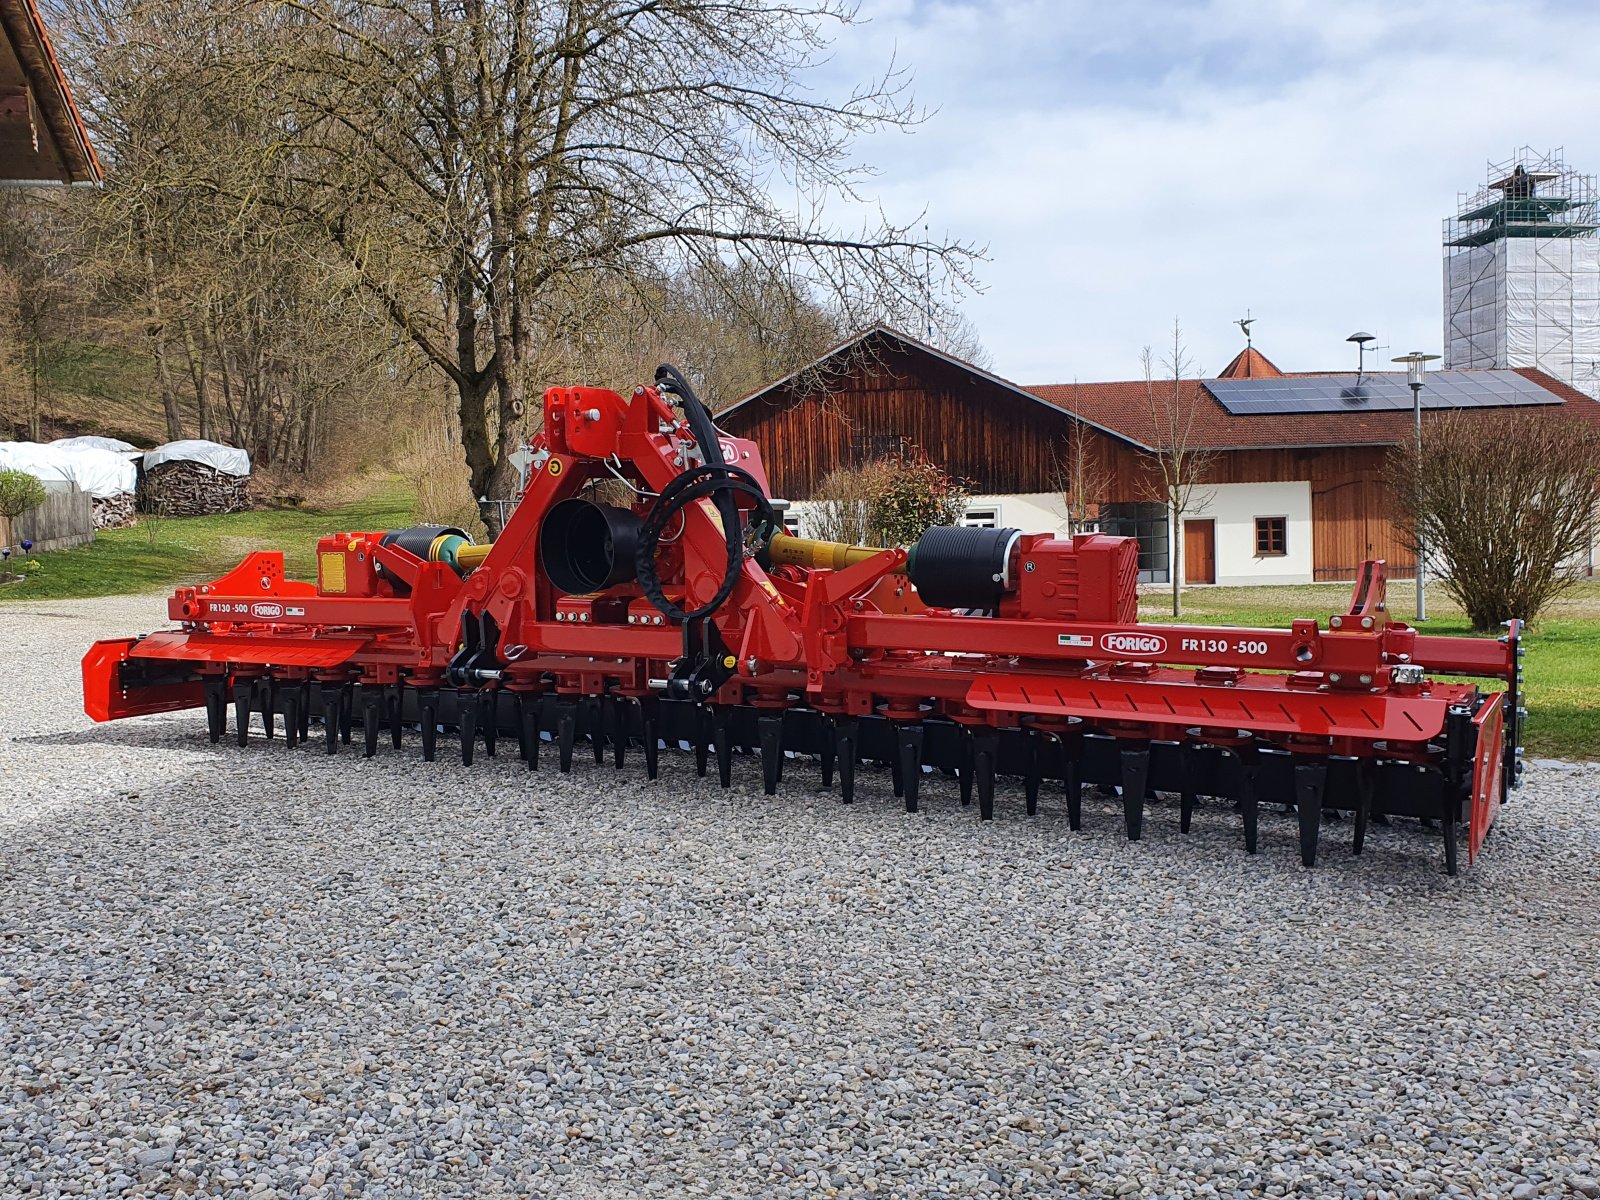 Kreiselegge des Typs Forigo FR130-500, Neumaschine in Oberornau (Bild 1)